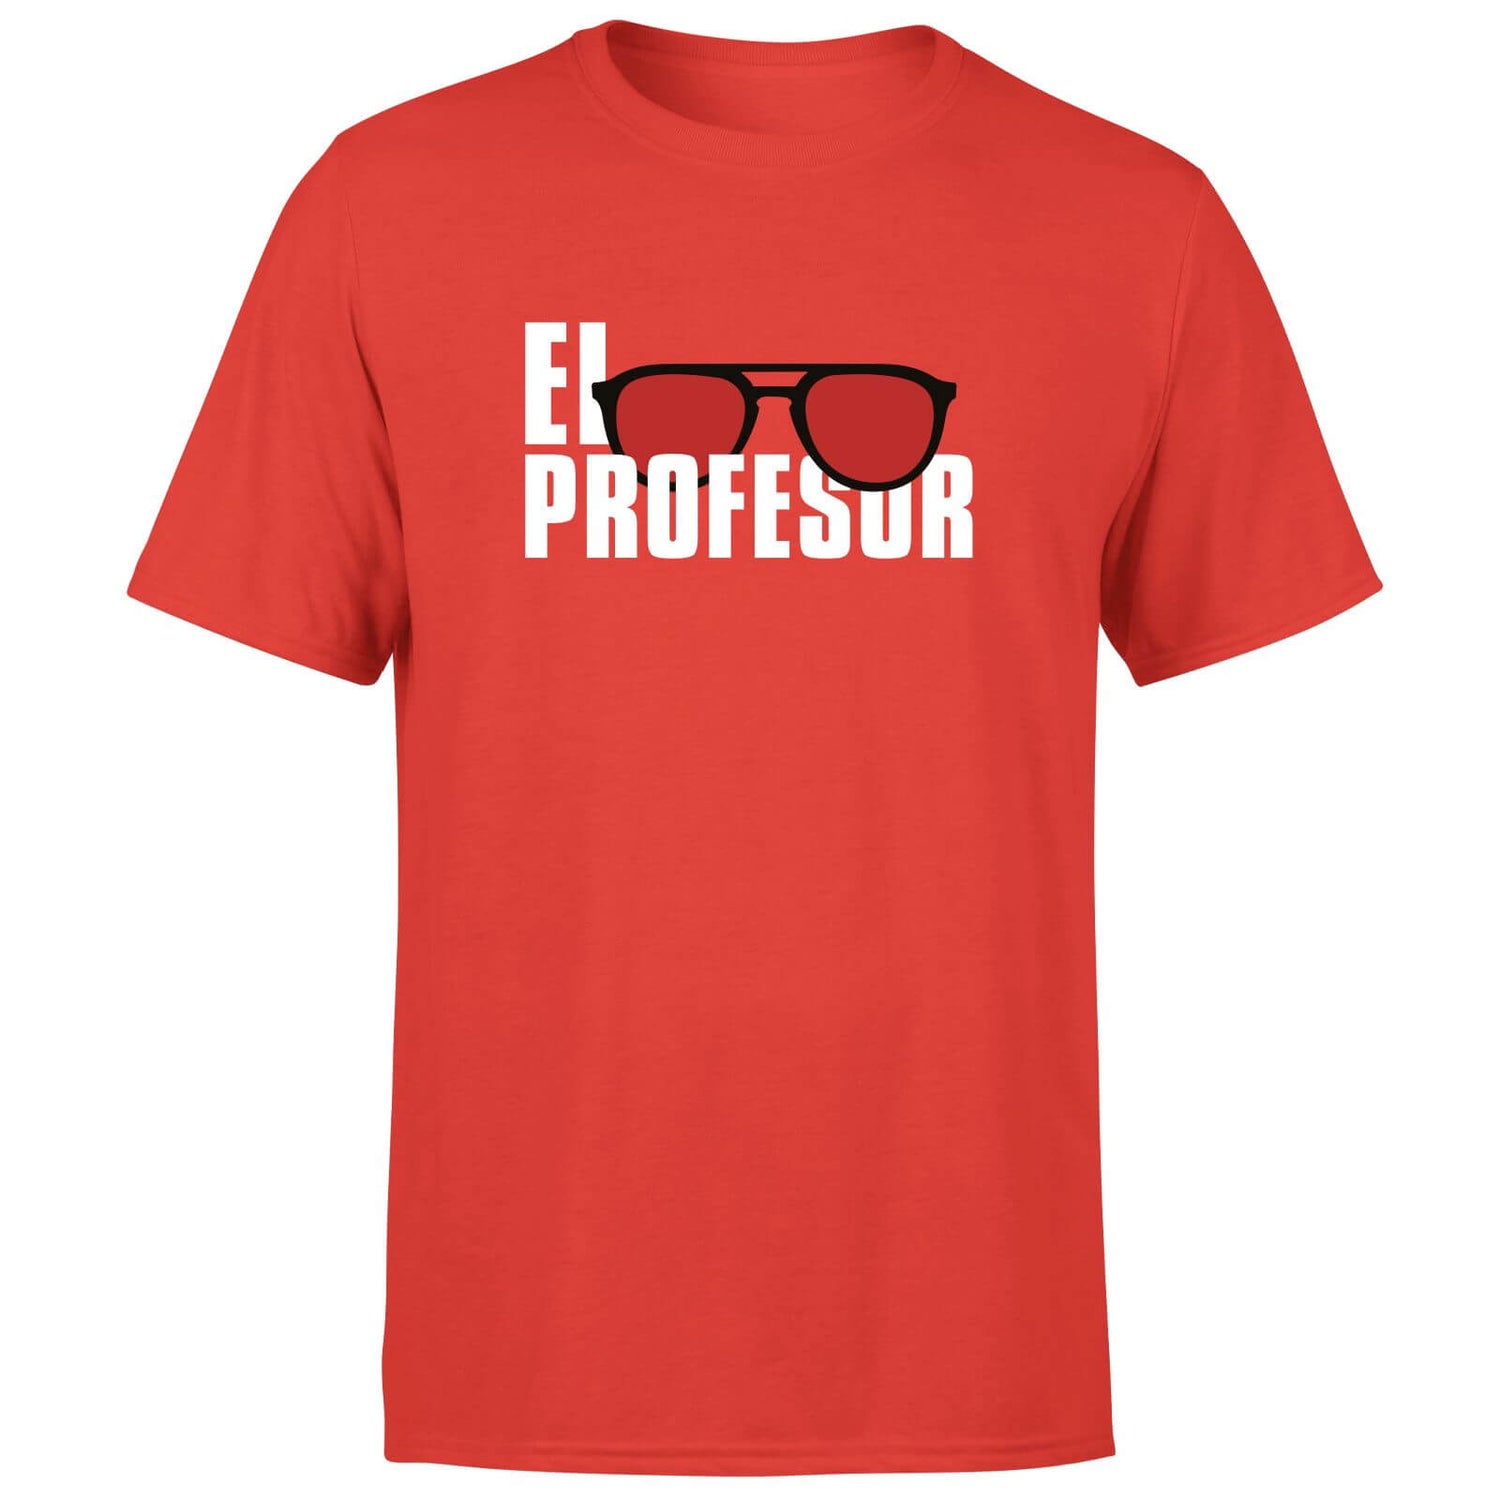 Money Heist El Profesor Men's T-Shirt - Rood - L - Rood